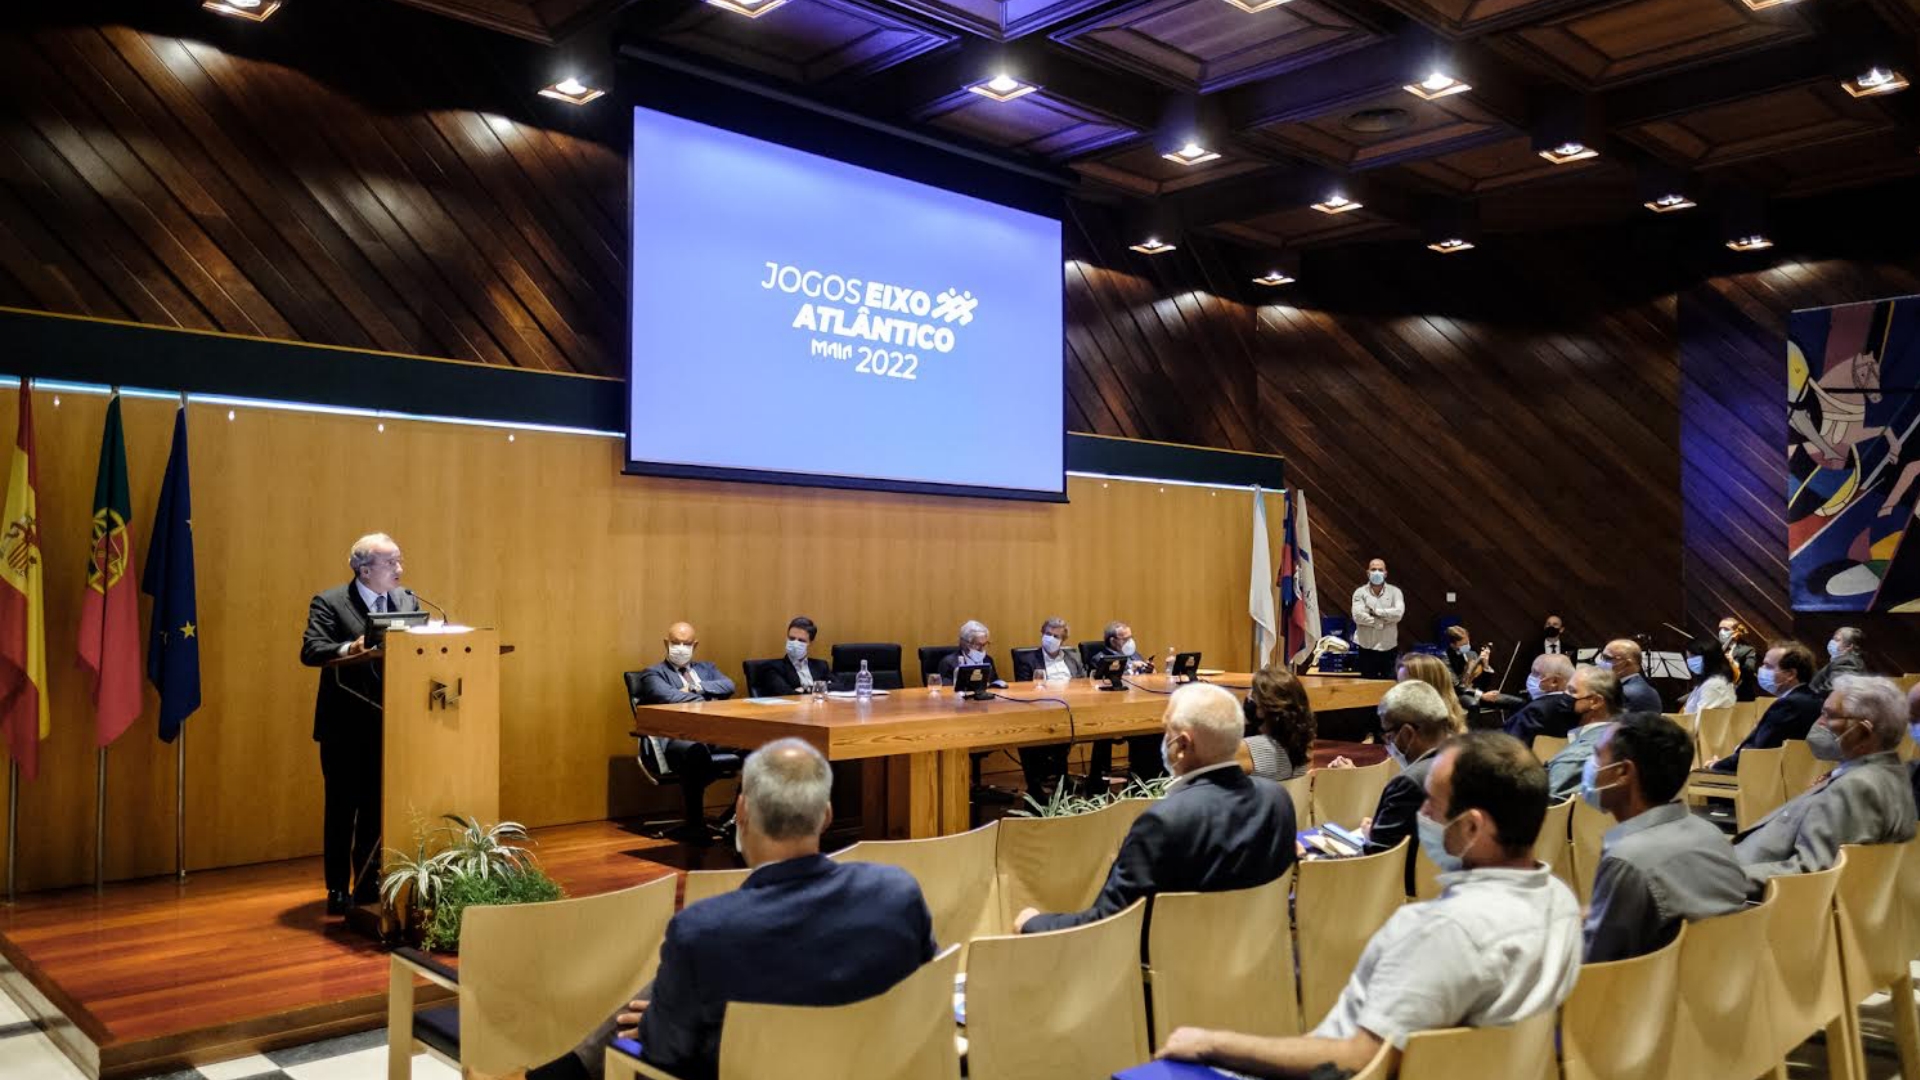 Câmara da Maia recebe bandeira dos Jogos do Eixo Atlântico 2022